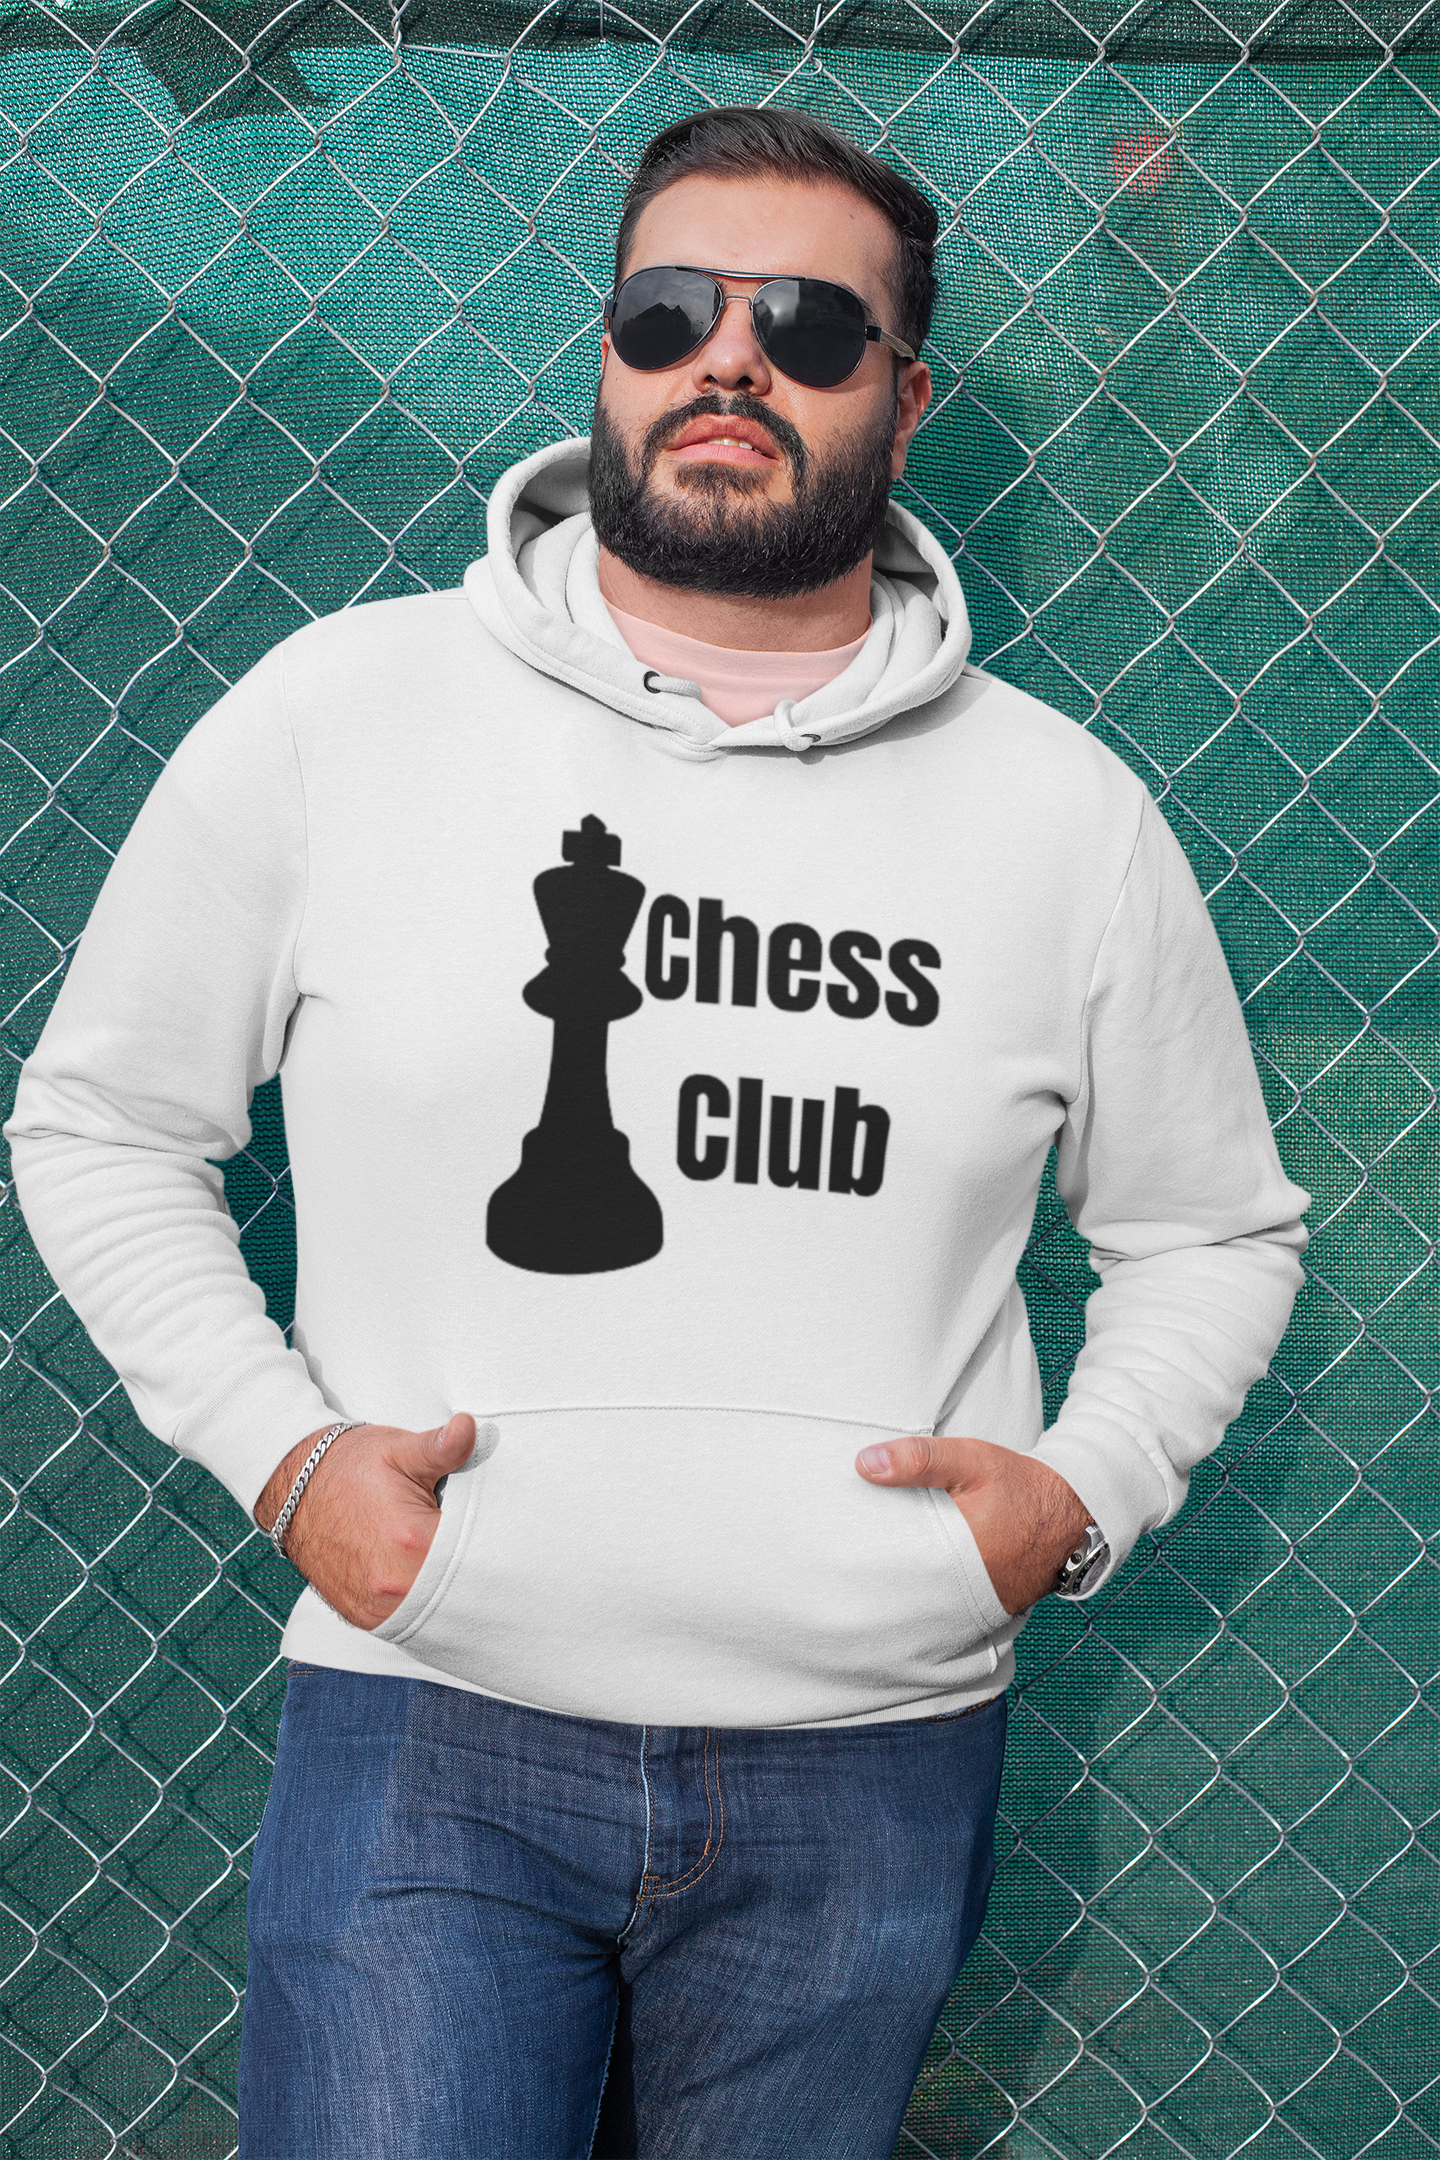 Chess club